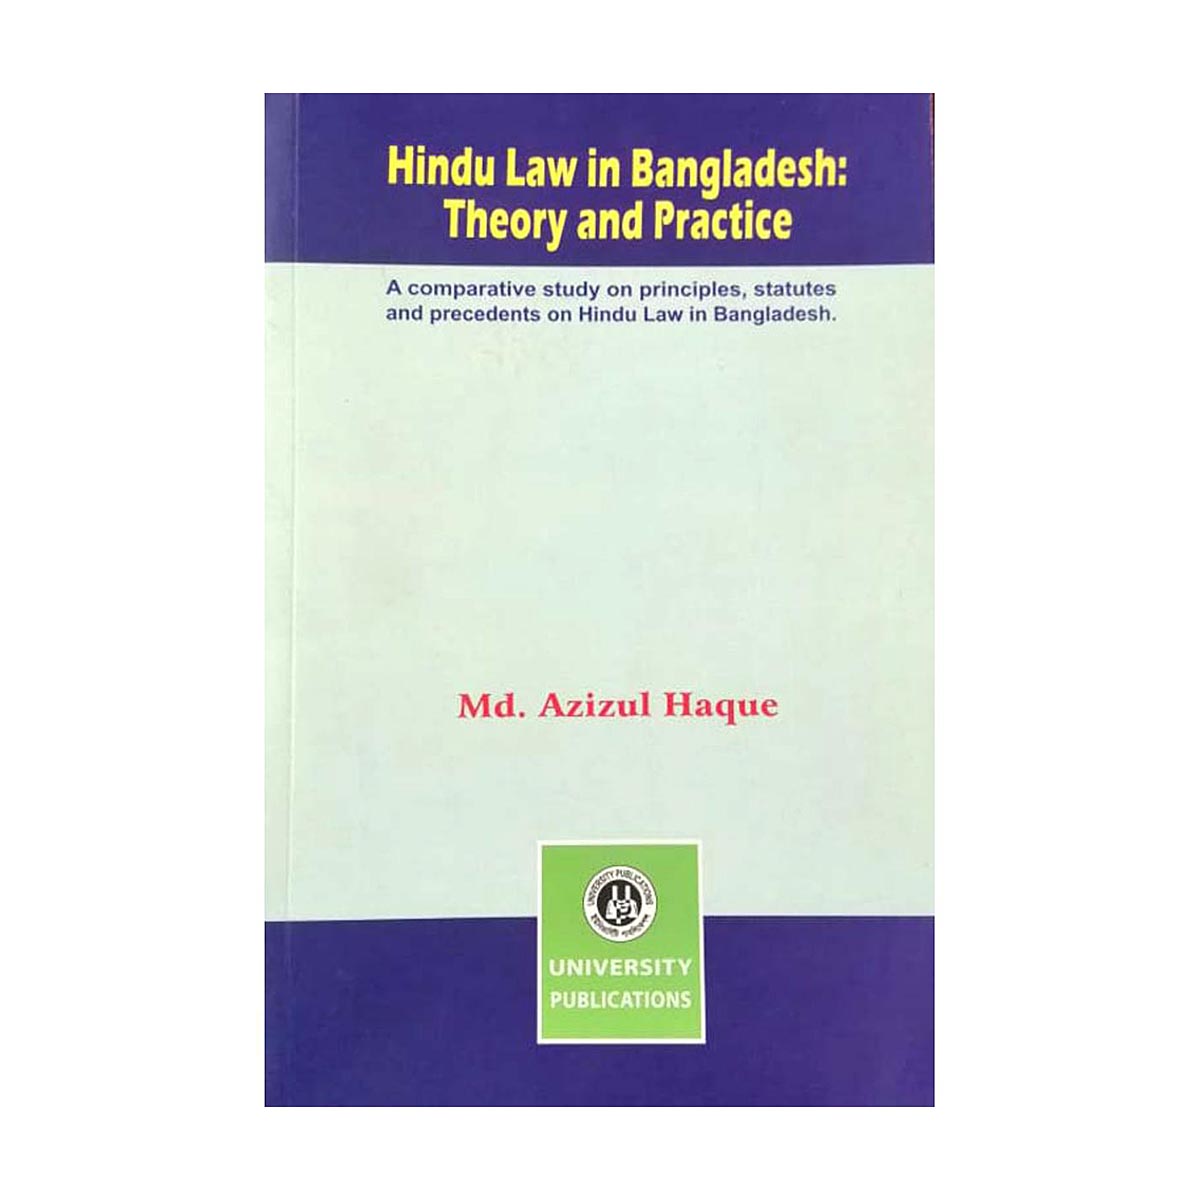 Hindu Law in Bangladesh Theory and Practice (Md. Azizul Haque)